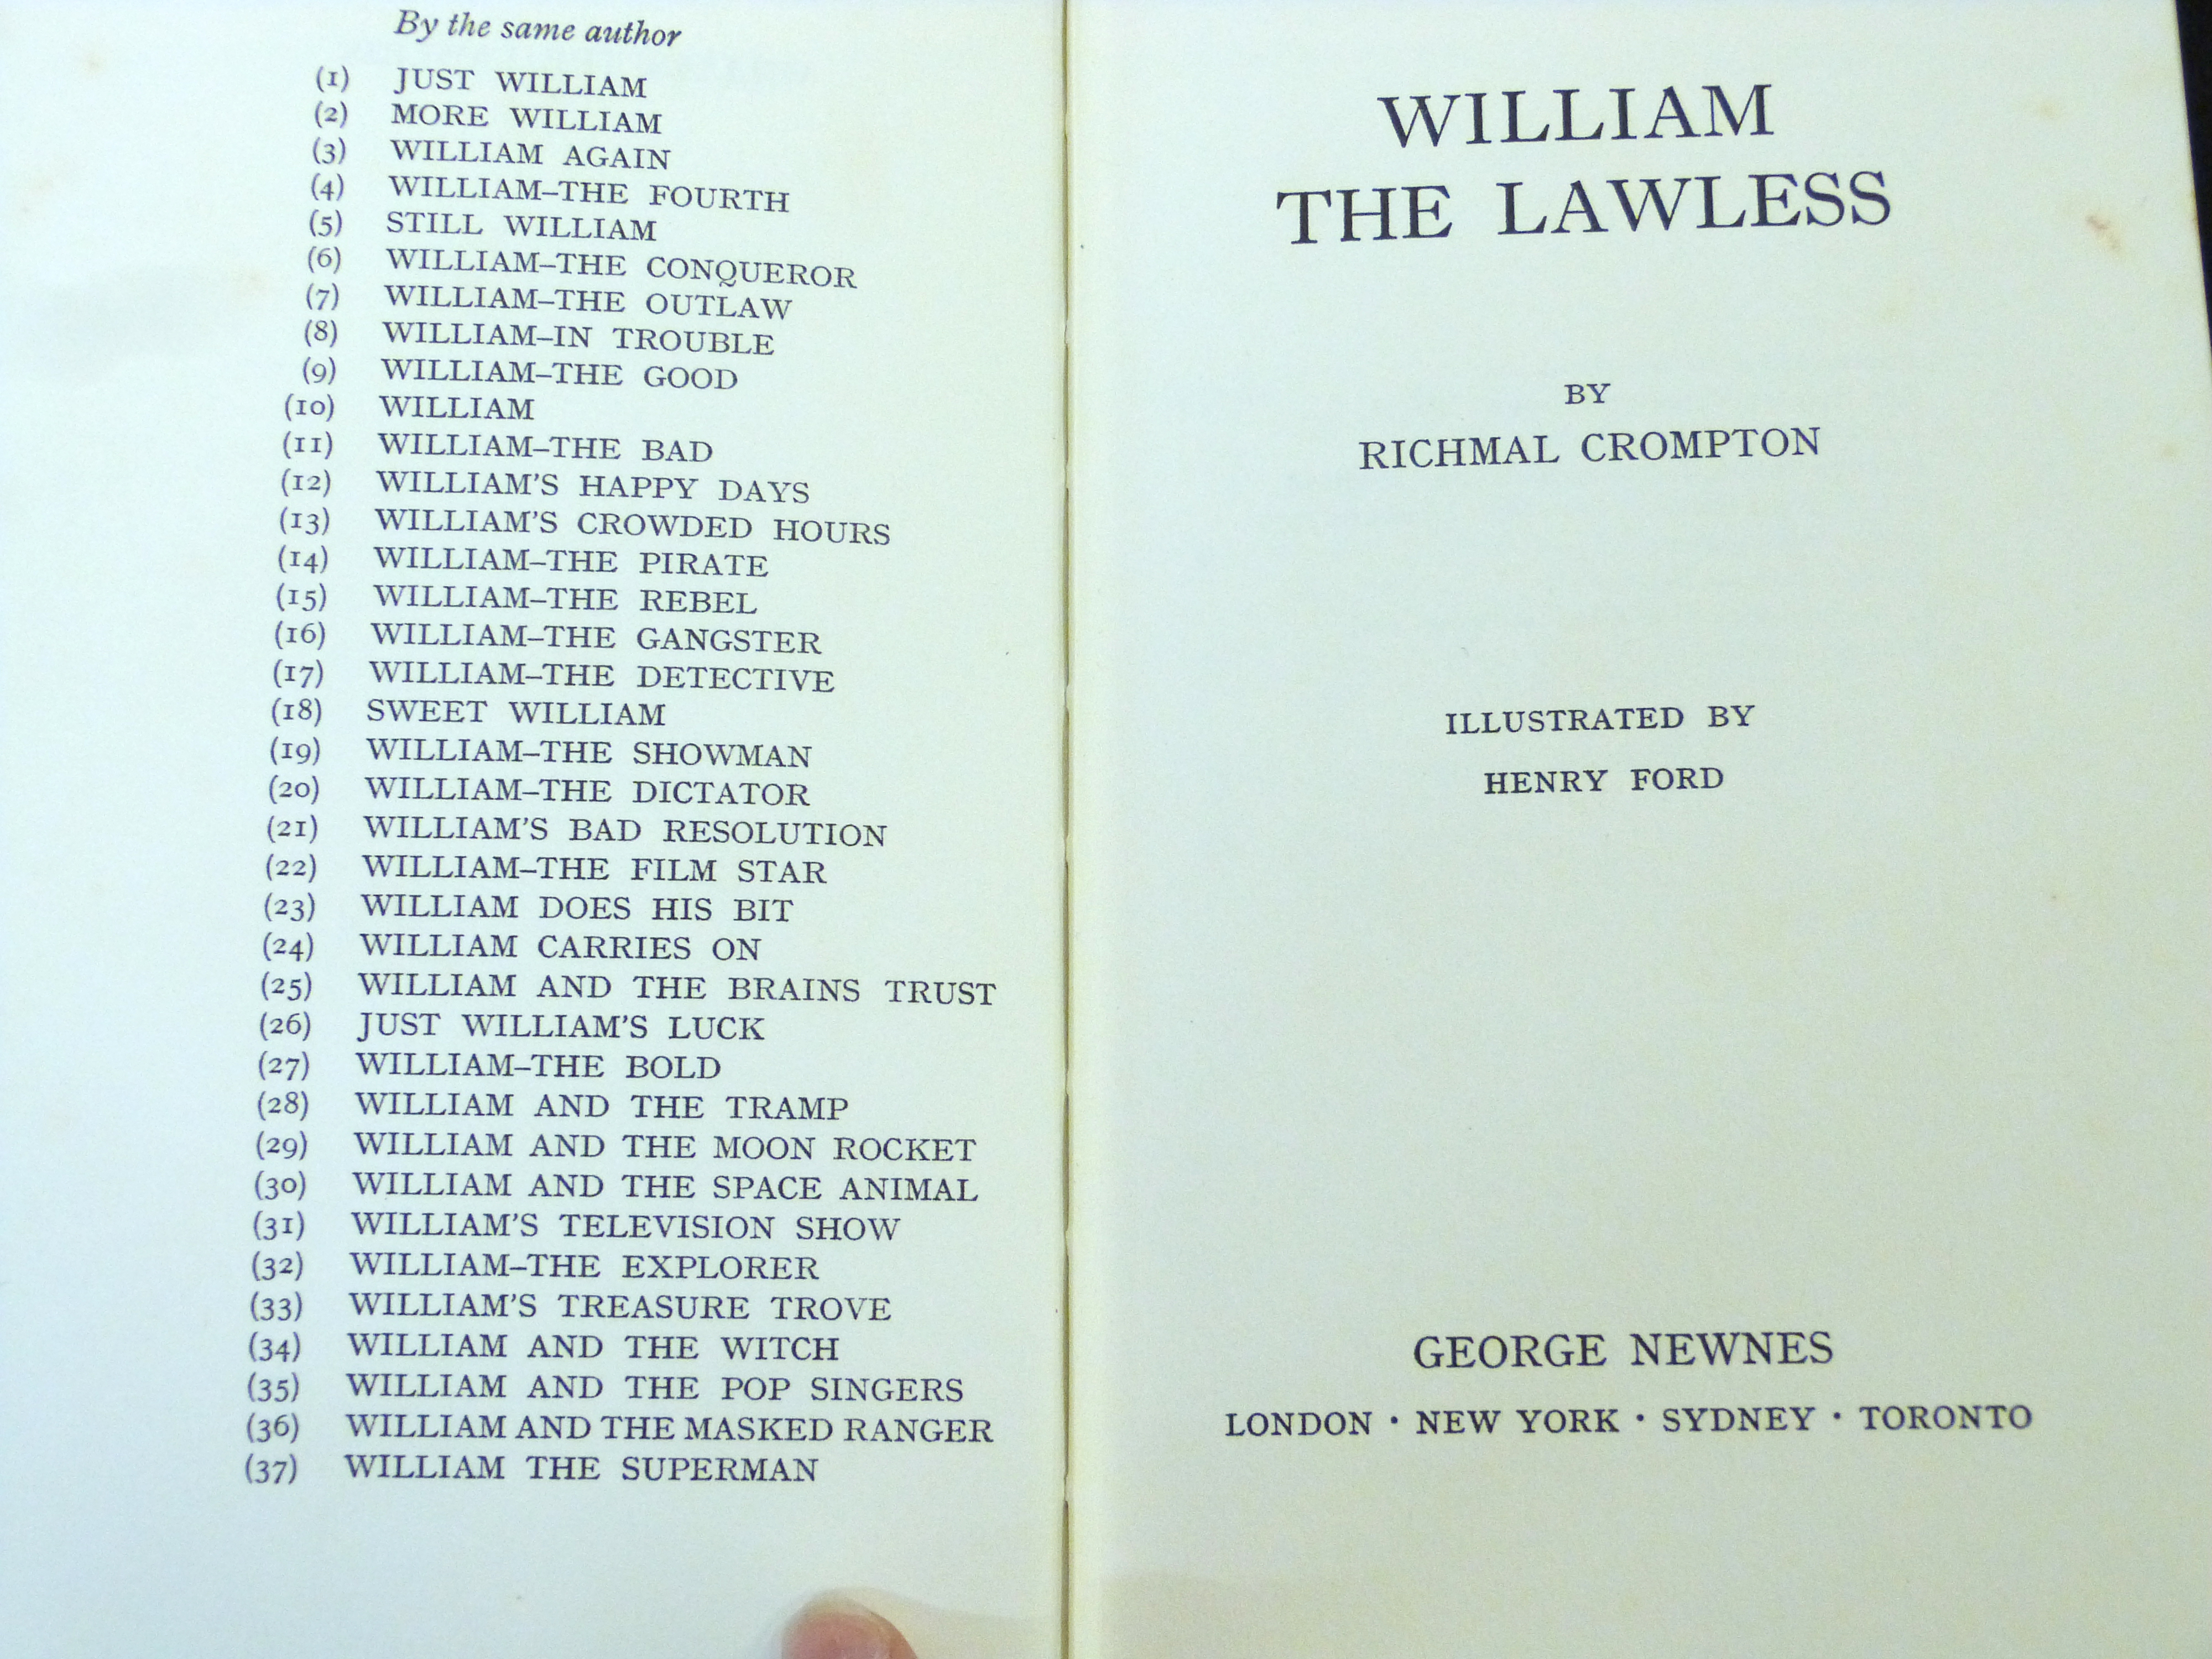 RICHMAL CROMPTON: WILLIAM THE LAWLESS, London, New York, Sydney, Toronto, 1970, 1st edition, - Image 2 of 3